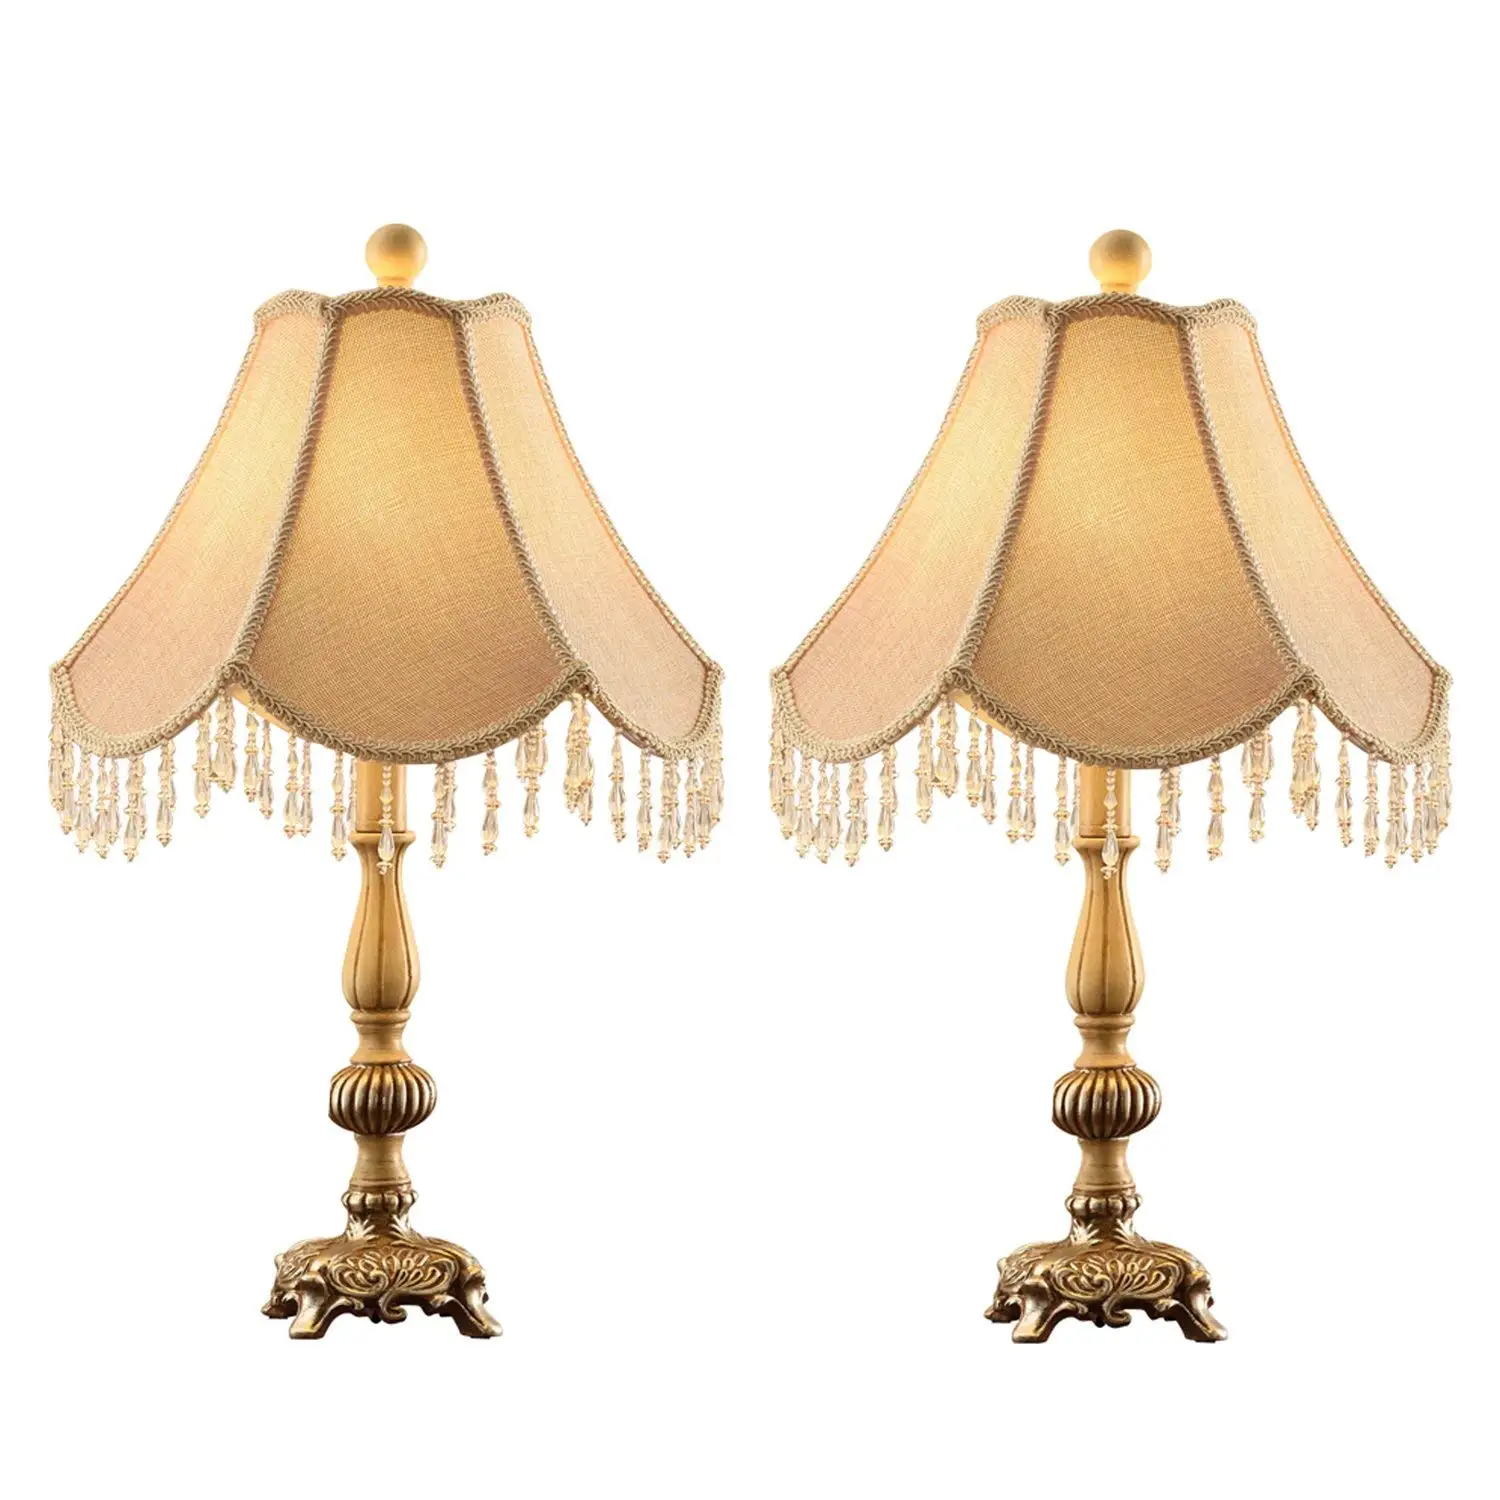 antique style bedside lamps